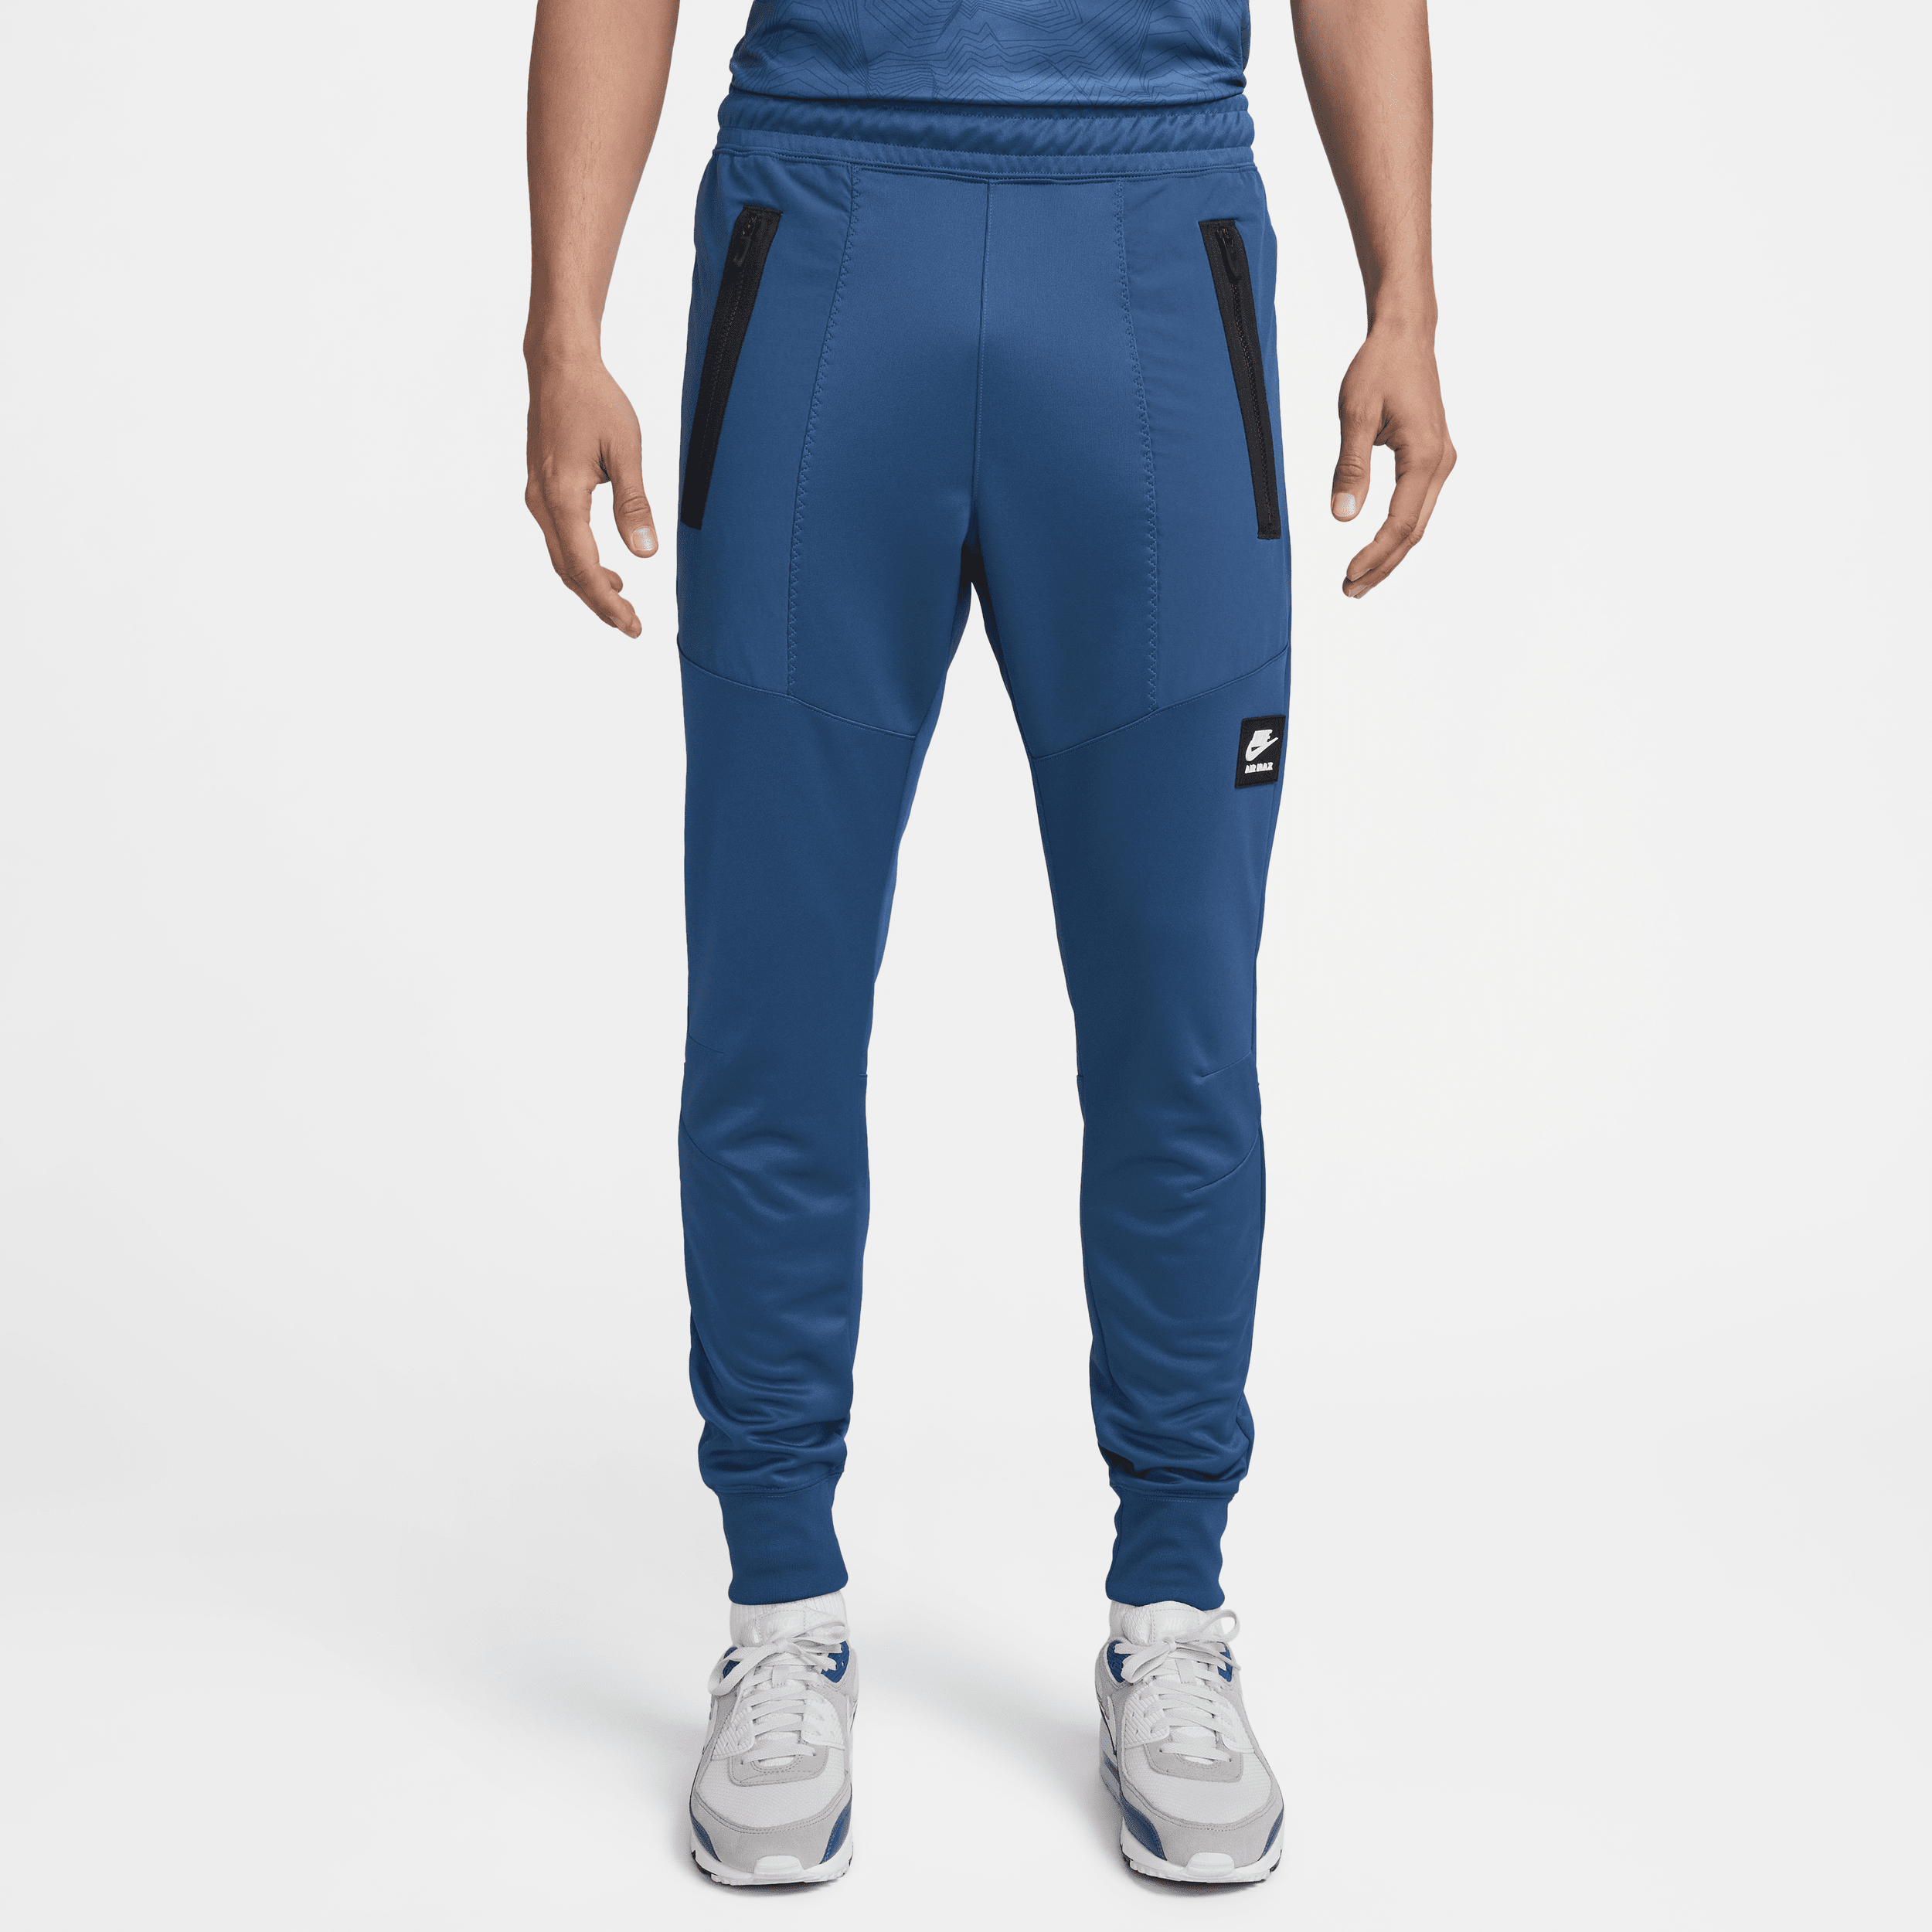 Nike Air Max Jogger - Hombre - Azul